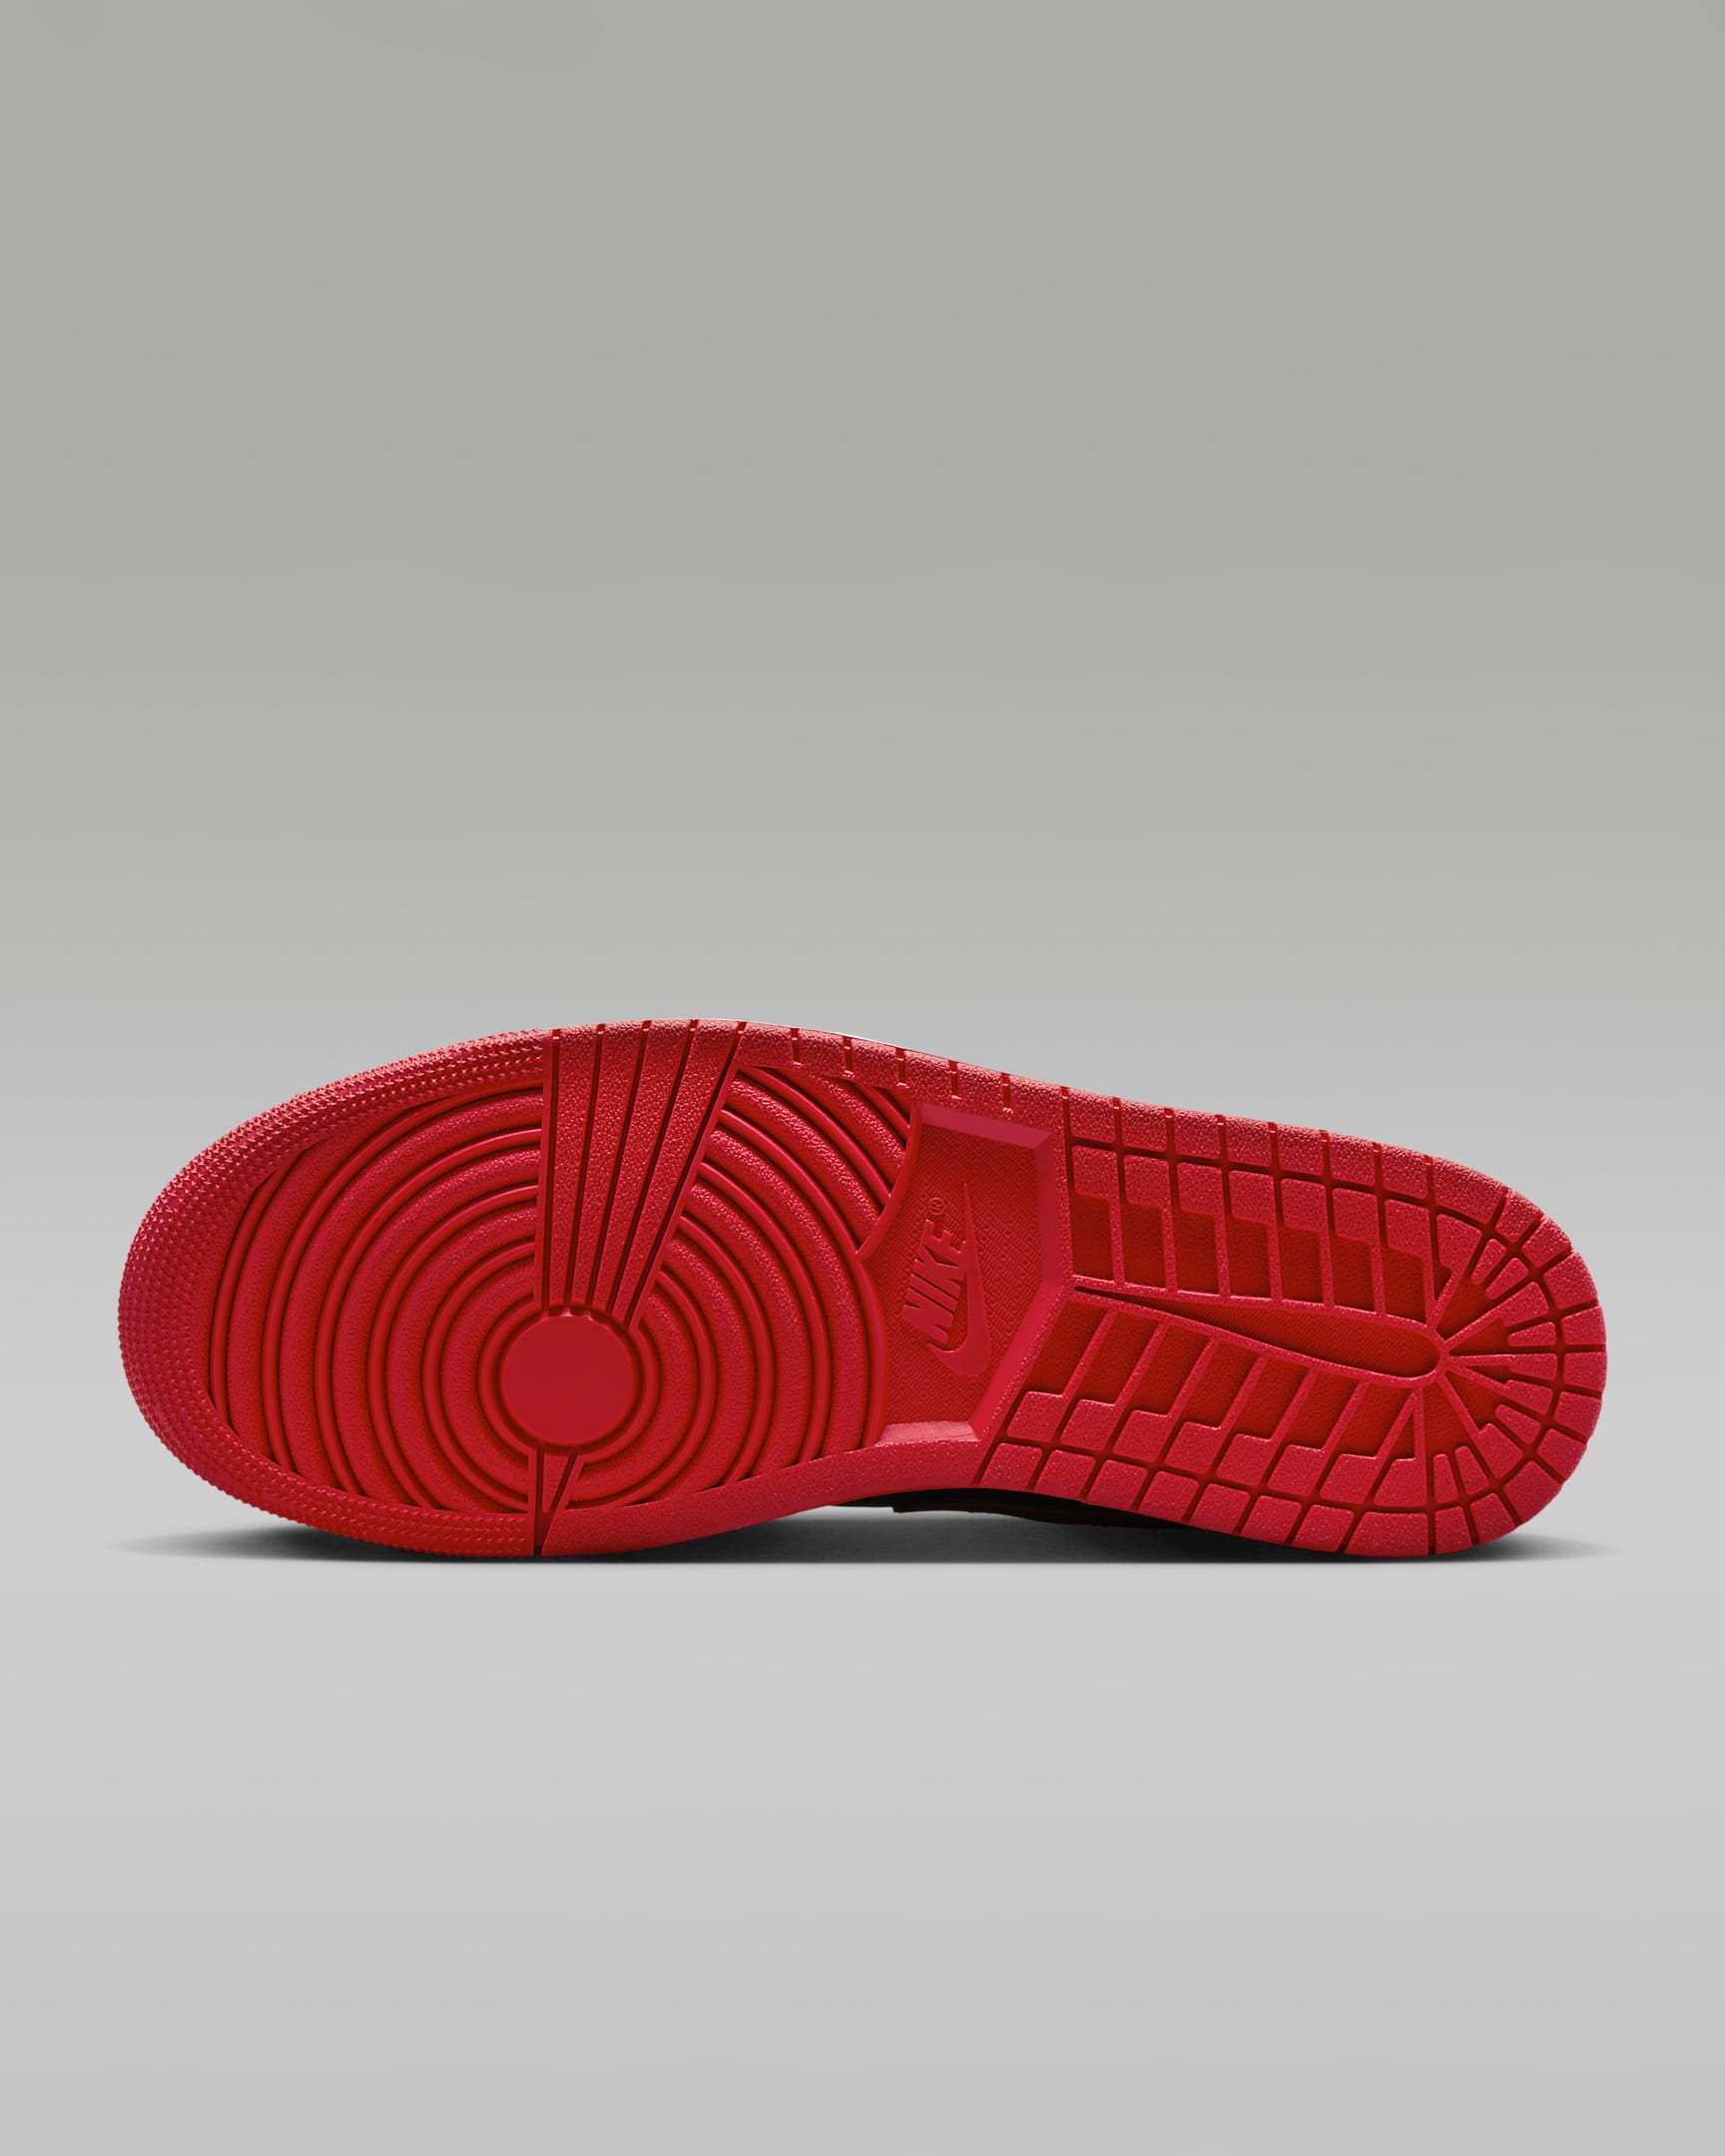 Air Jordan 1 Low Men's Shoes - Black/Cement Grey/White/Fire Red